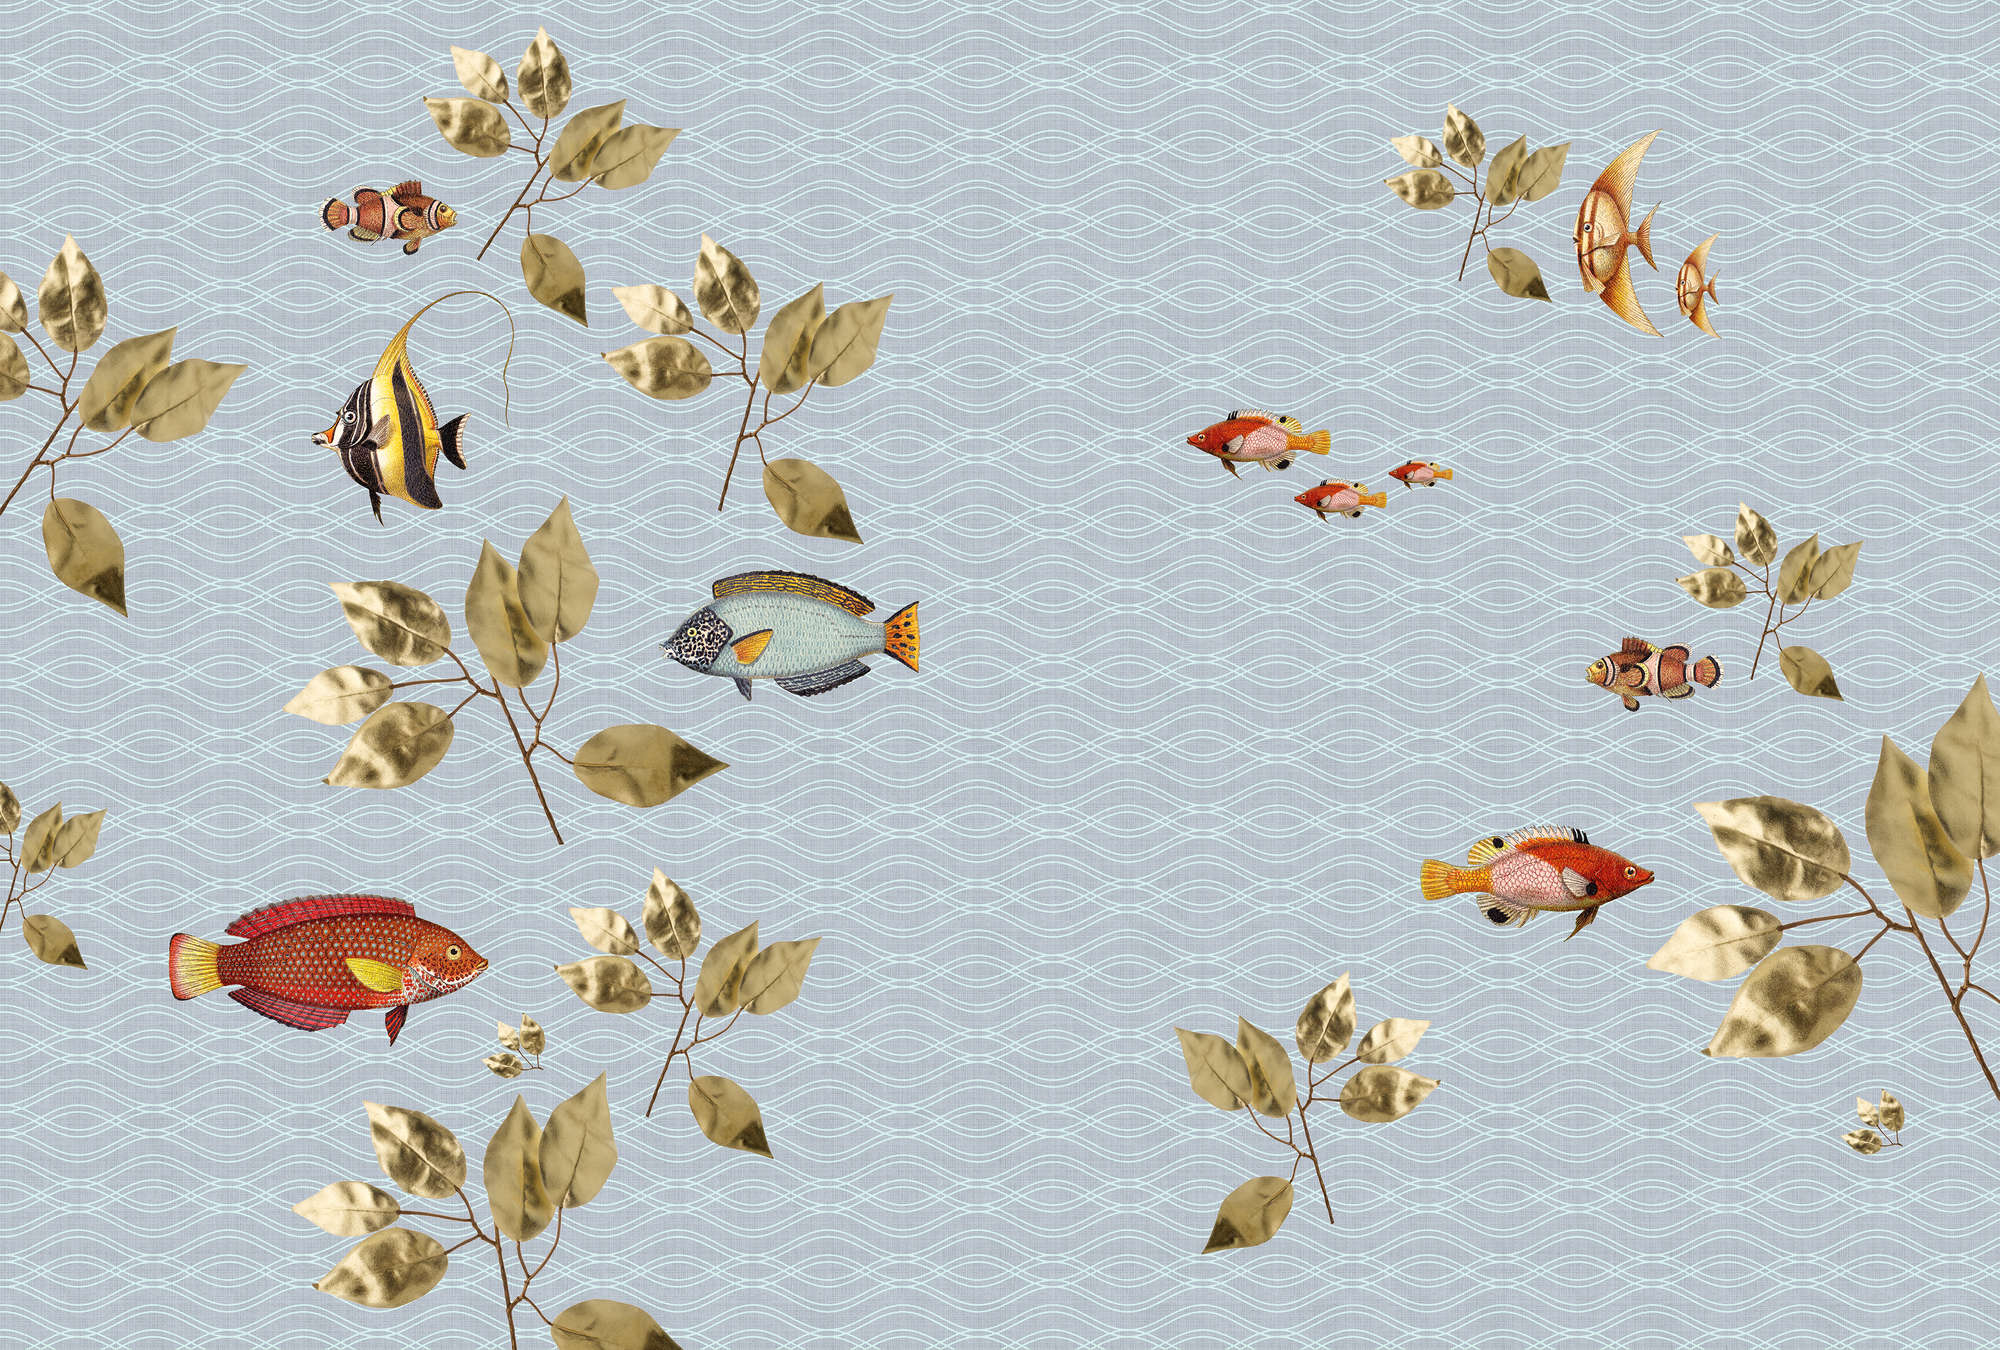             Brilliant fish 1 - Flying fish wallpaper in natural linen structure - Blue | Matt smooth fleece
        